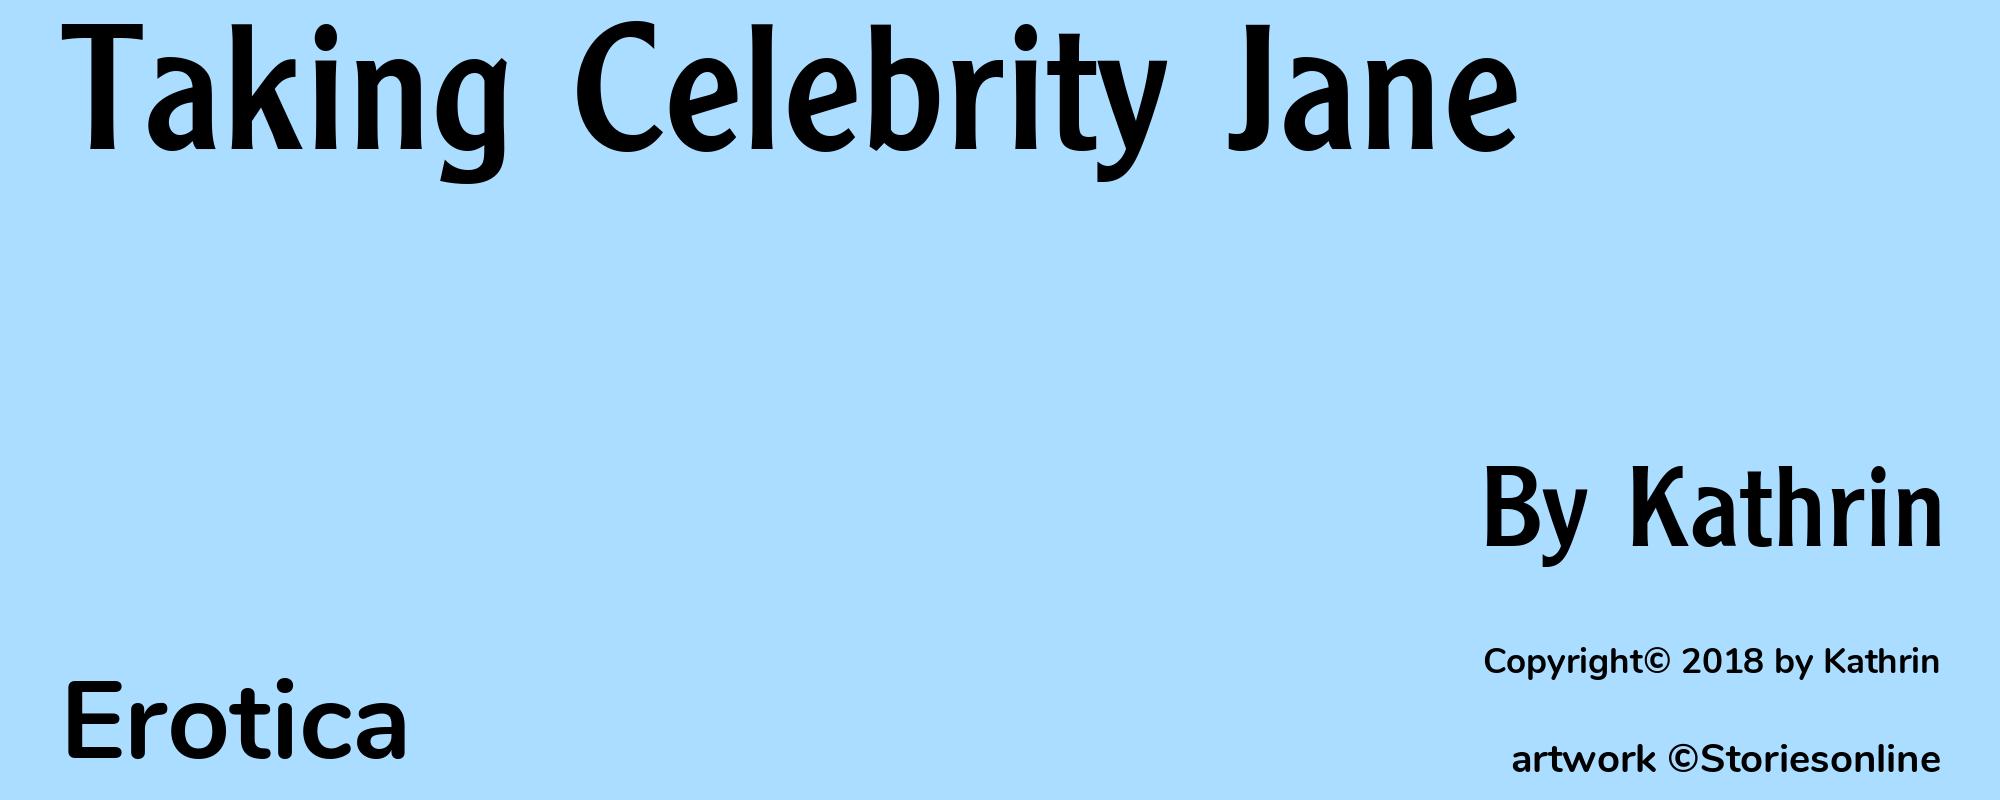 Taking Celebrity Jane - Cover